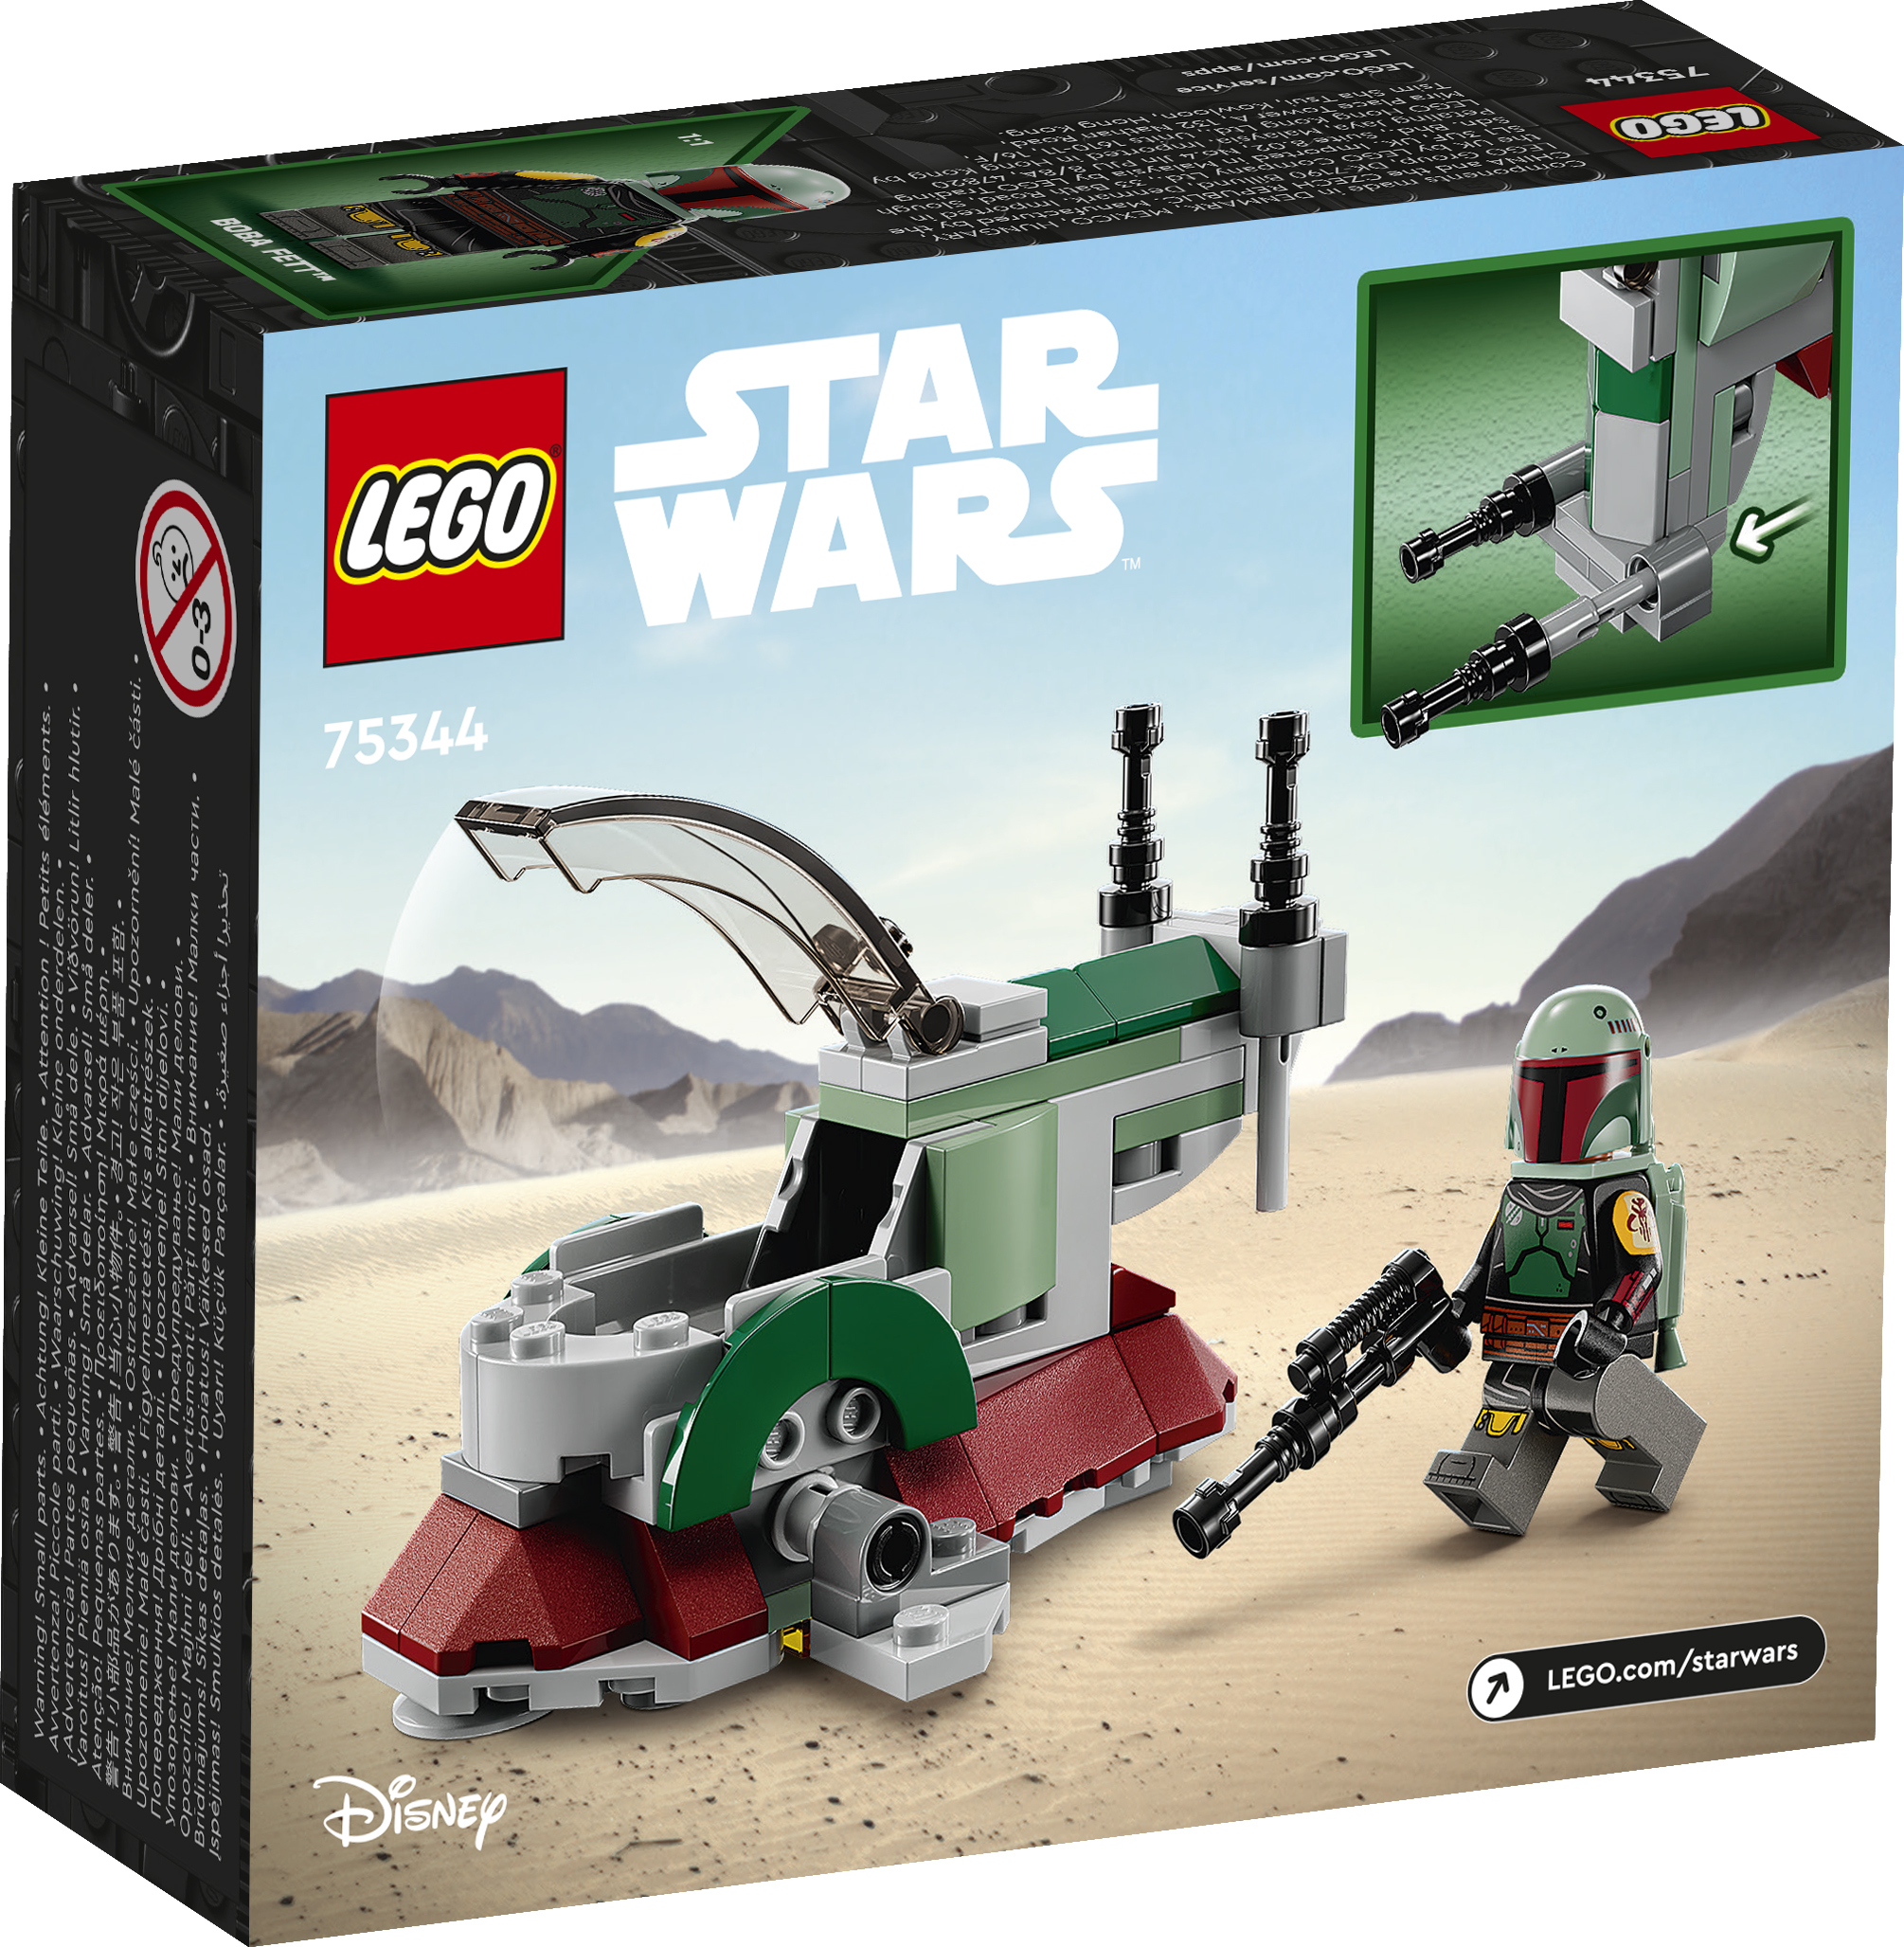 LEGO Star Wars Gift Box Russian Exclusive - The Brick Fan